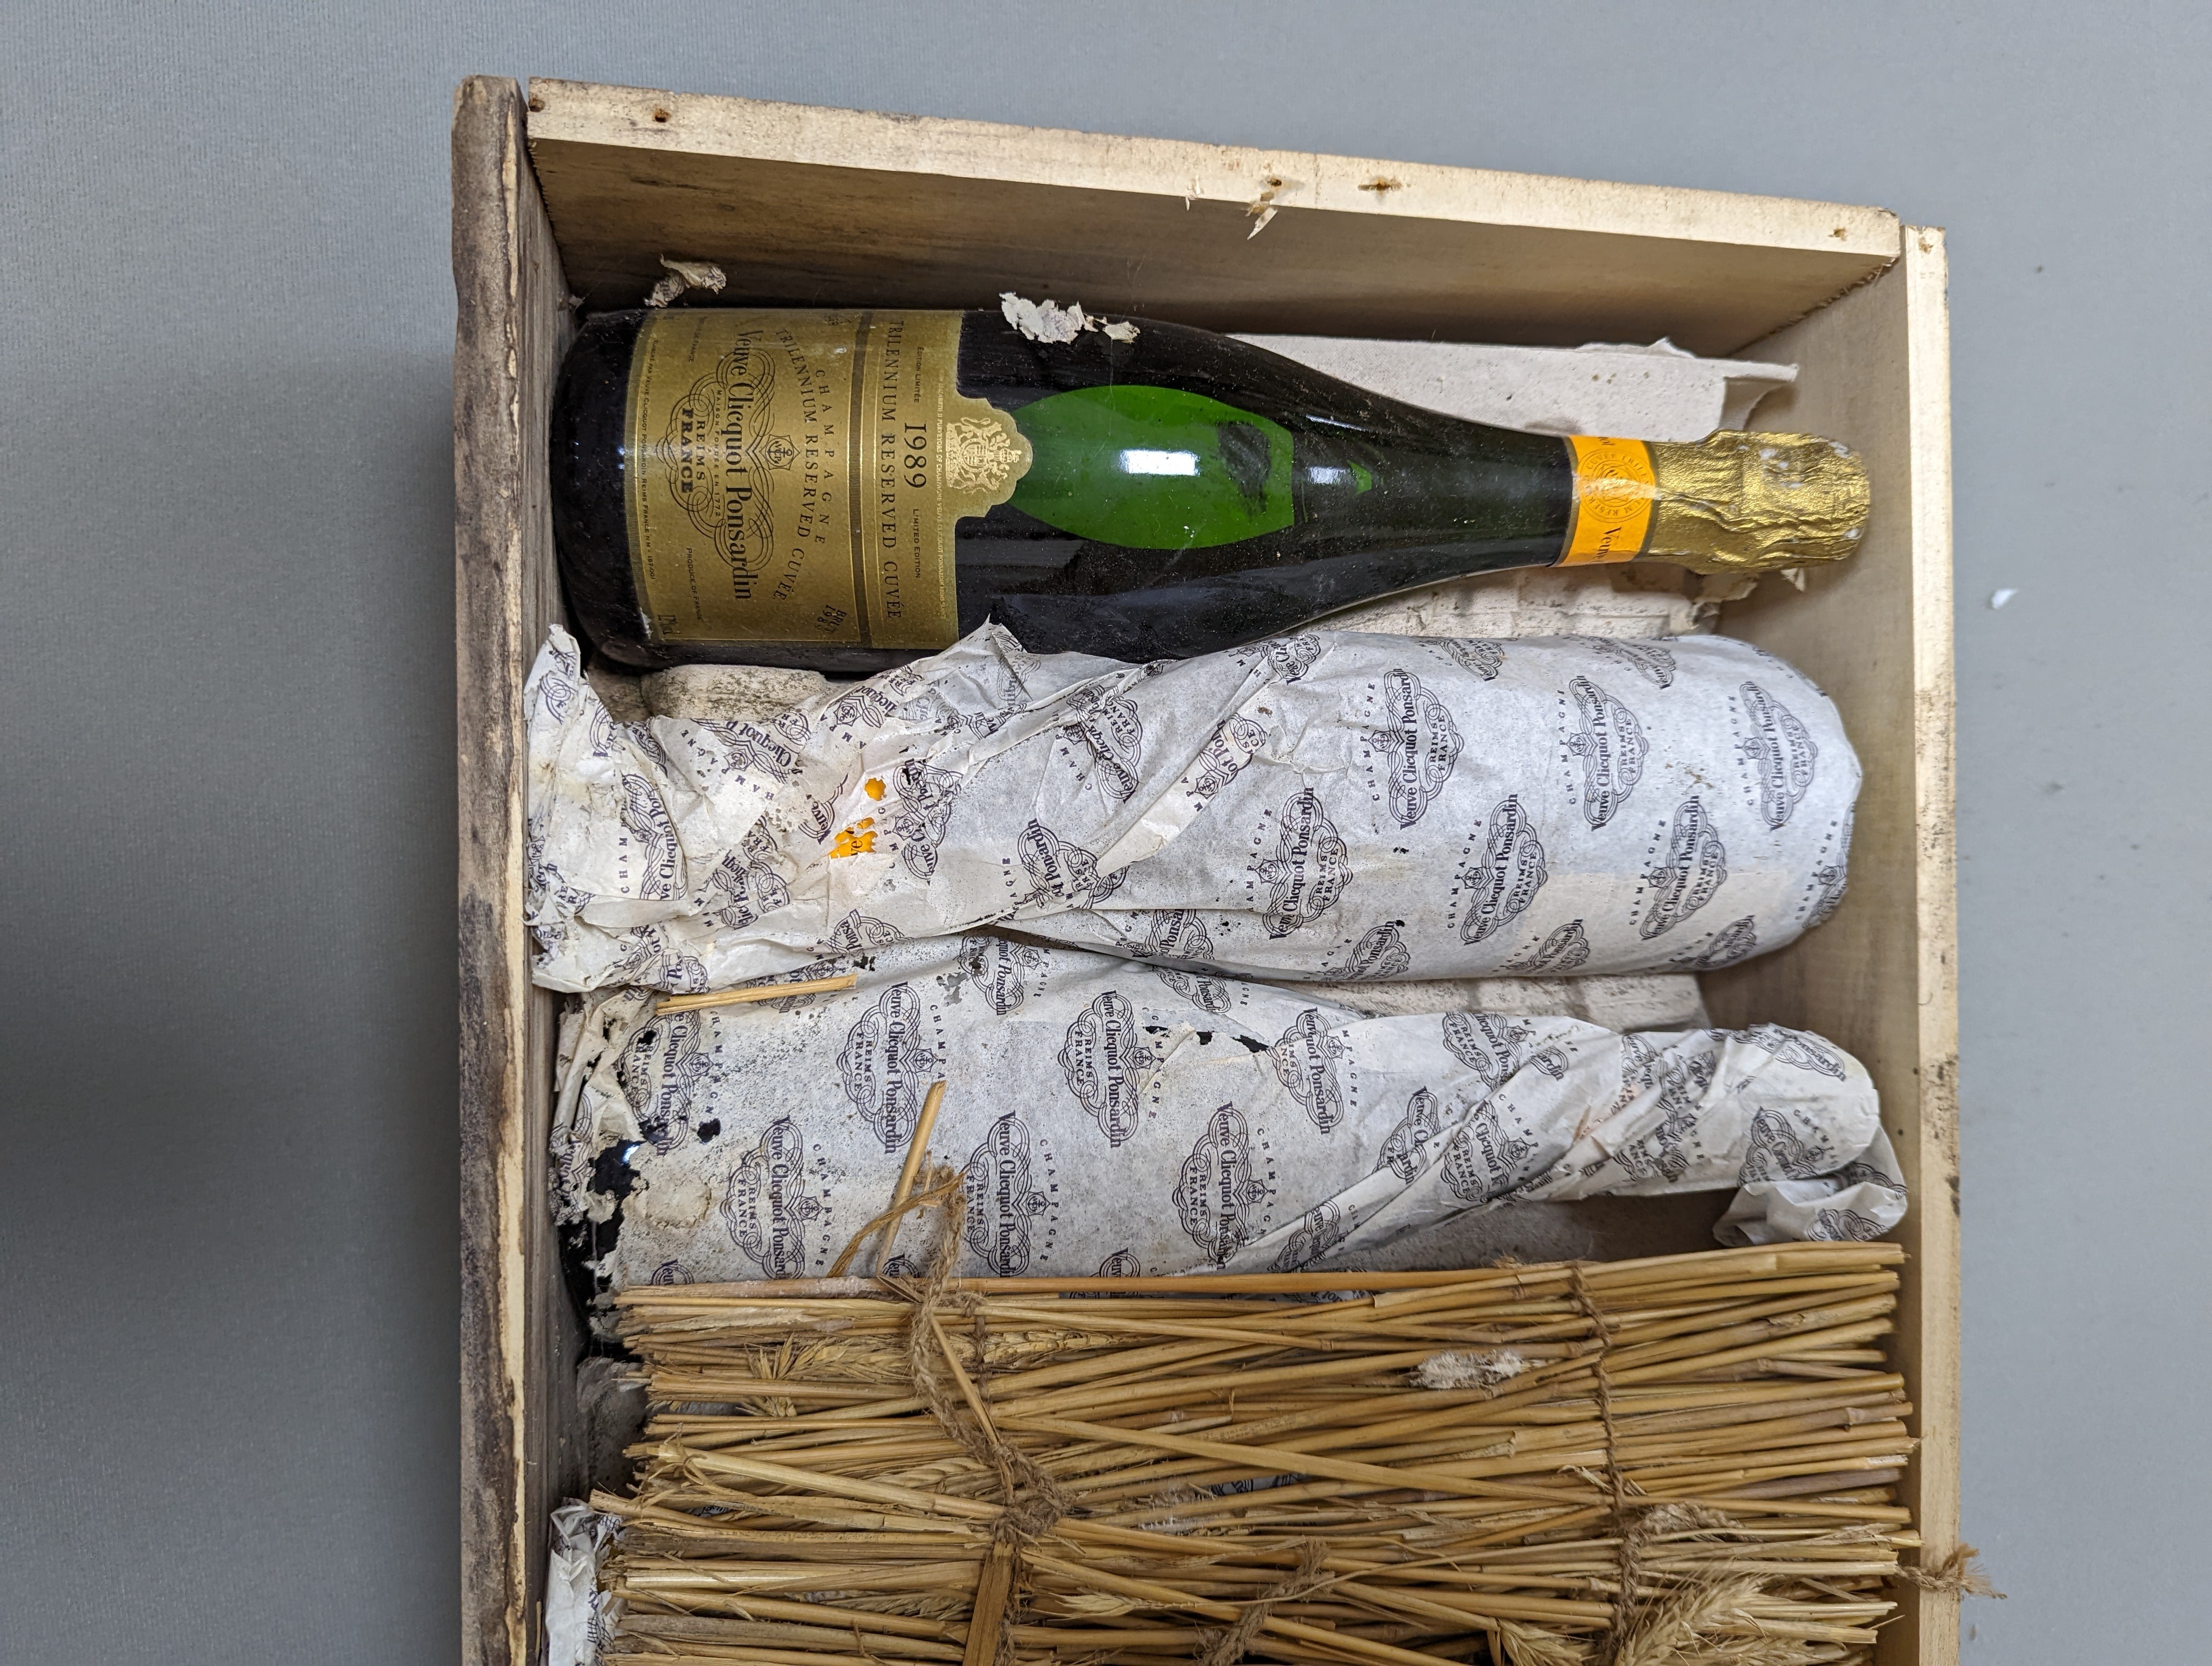 A case of 12 bottles of Veuve Cliquot Trillenium champagne, in OWC.